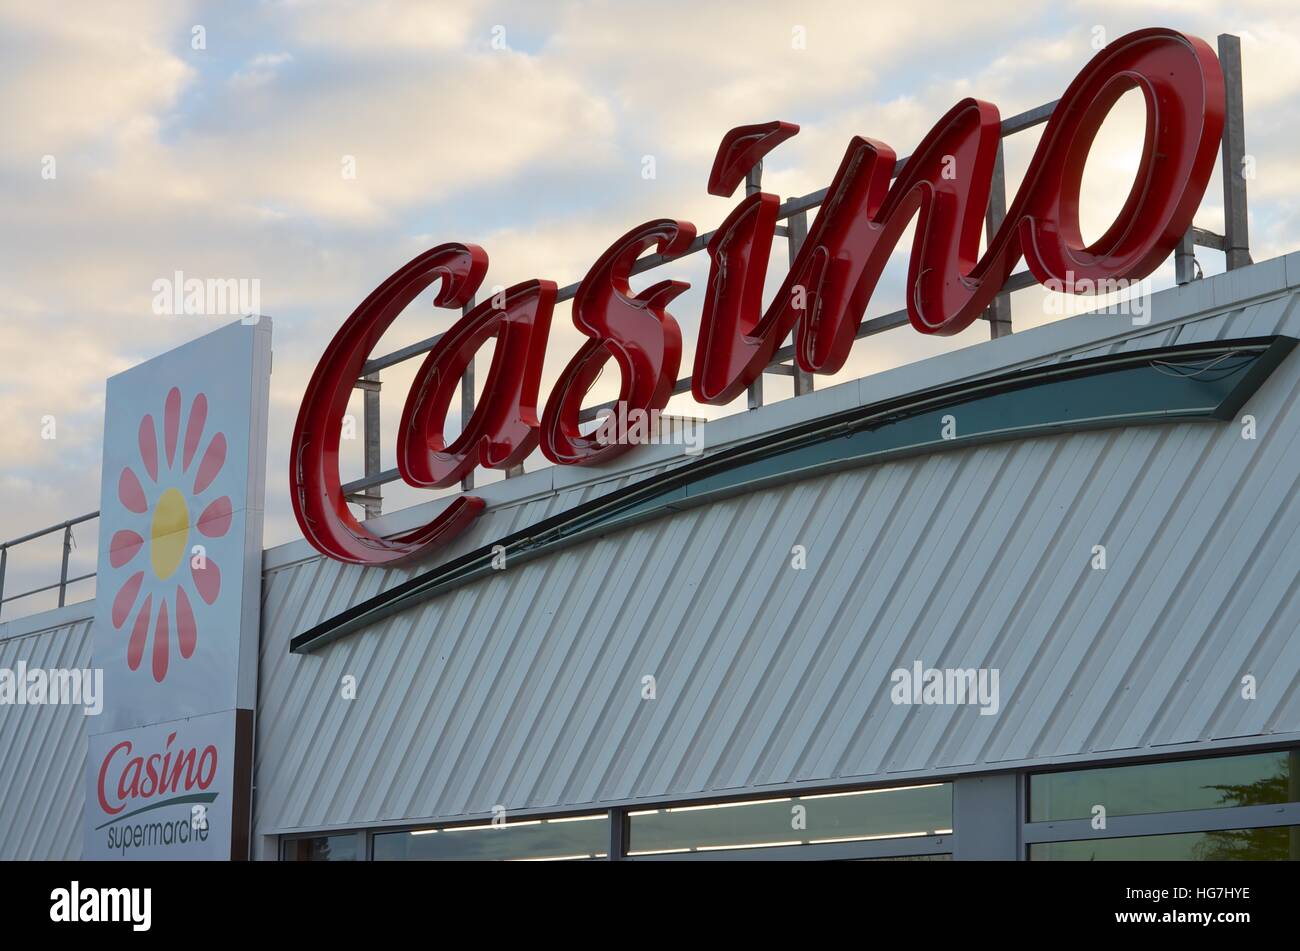 French Supermarket Chain Casino sign Stock Photo